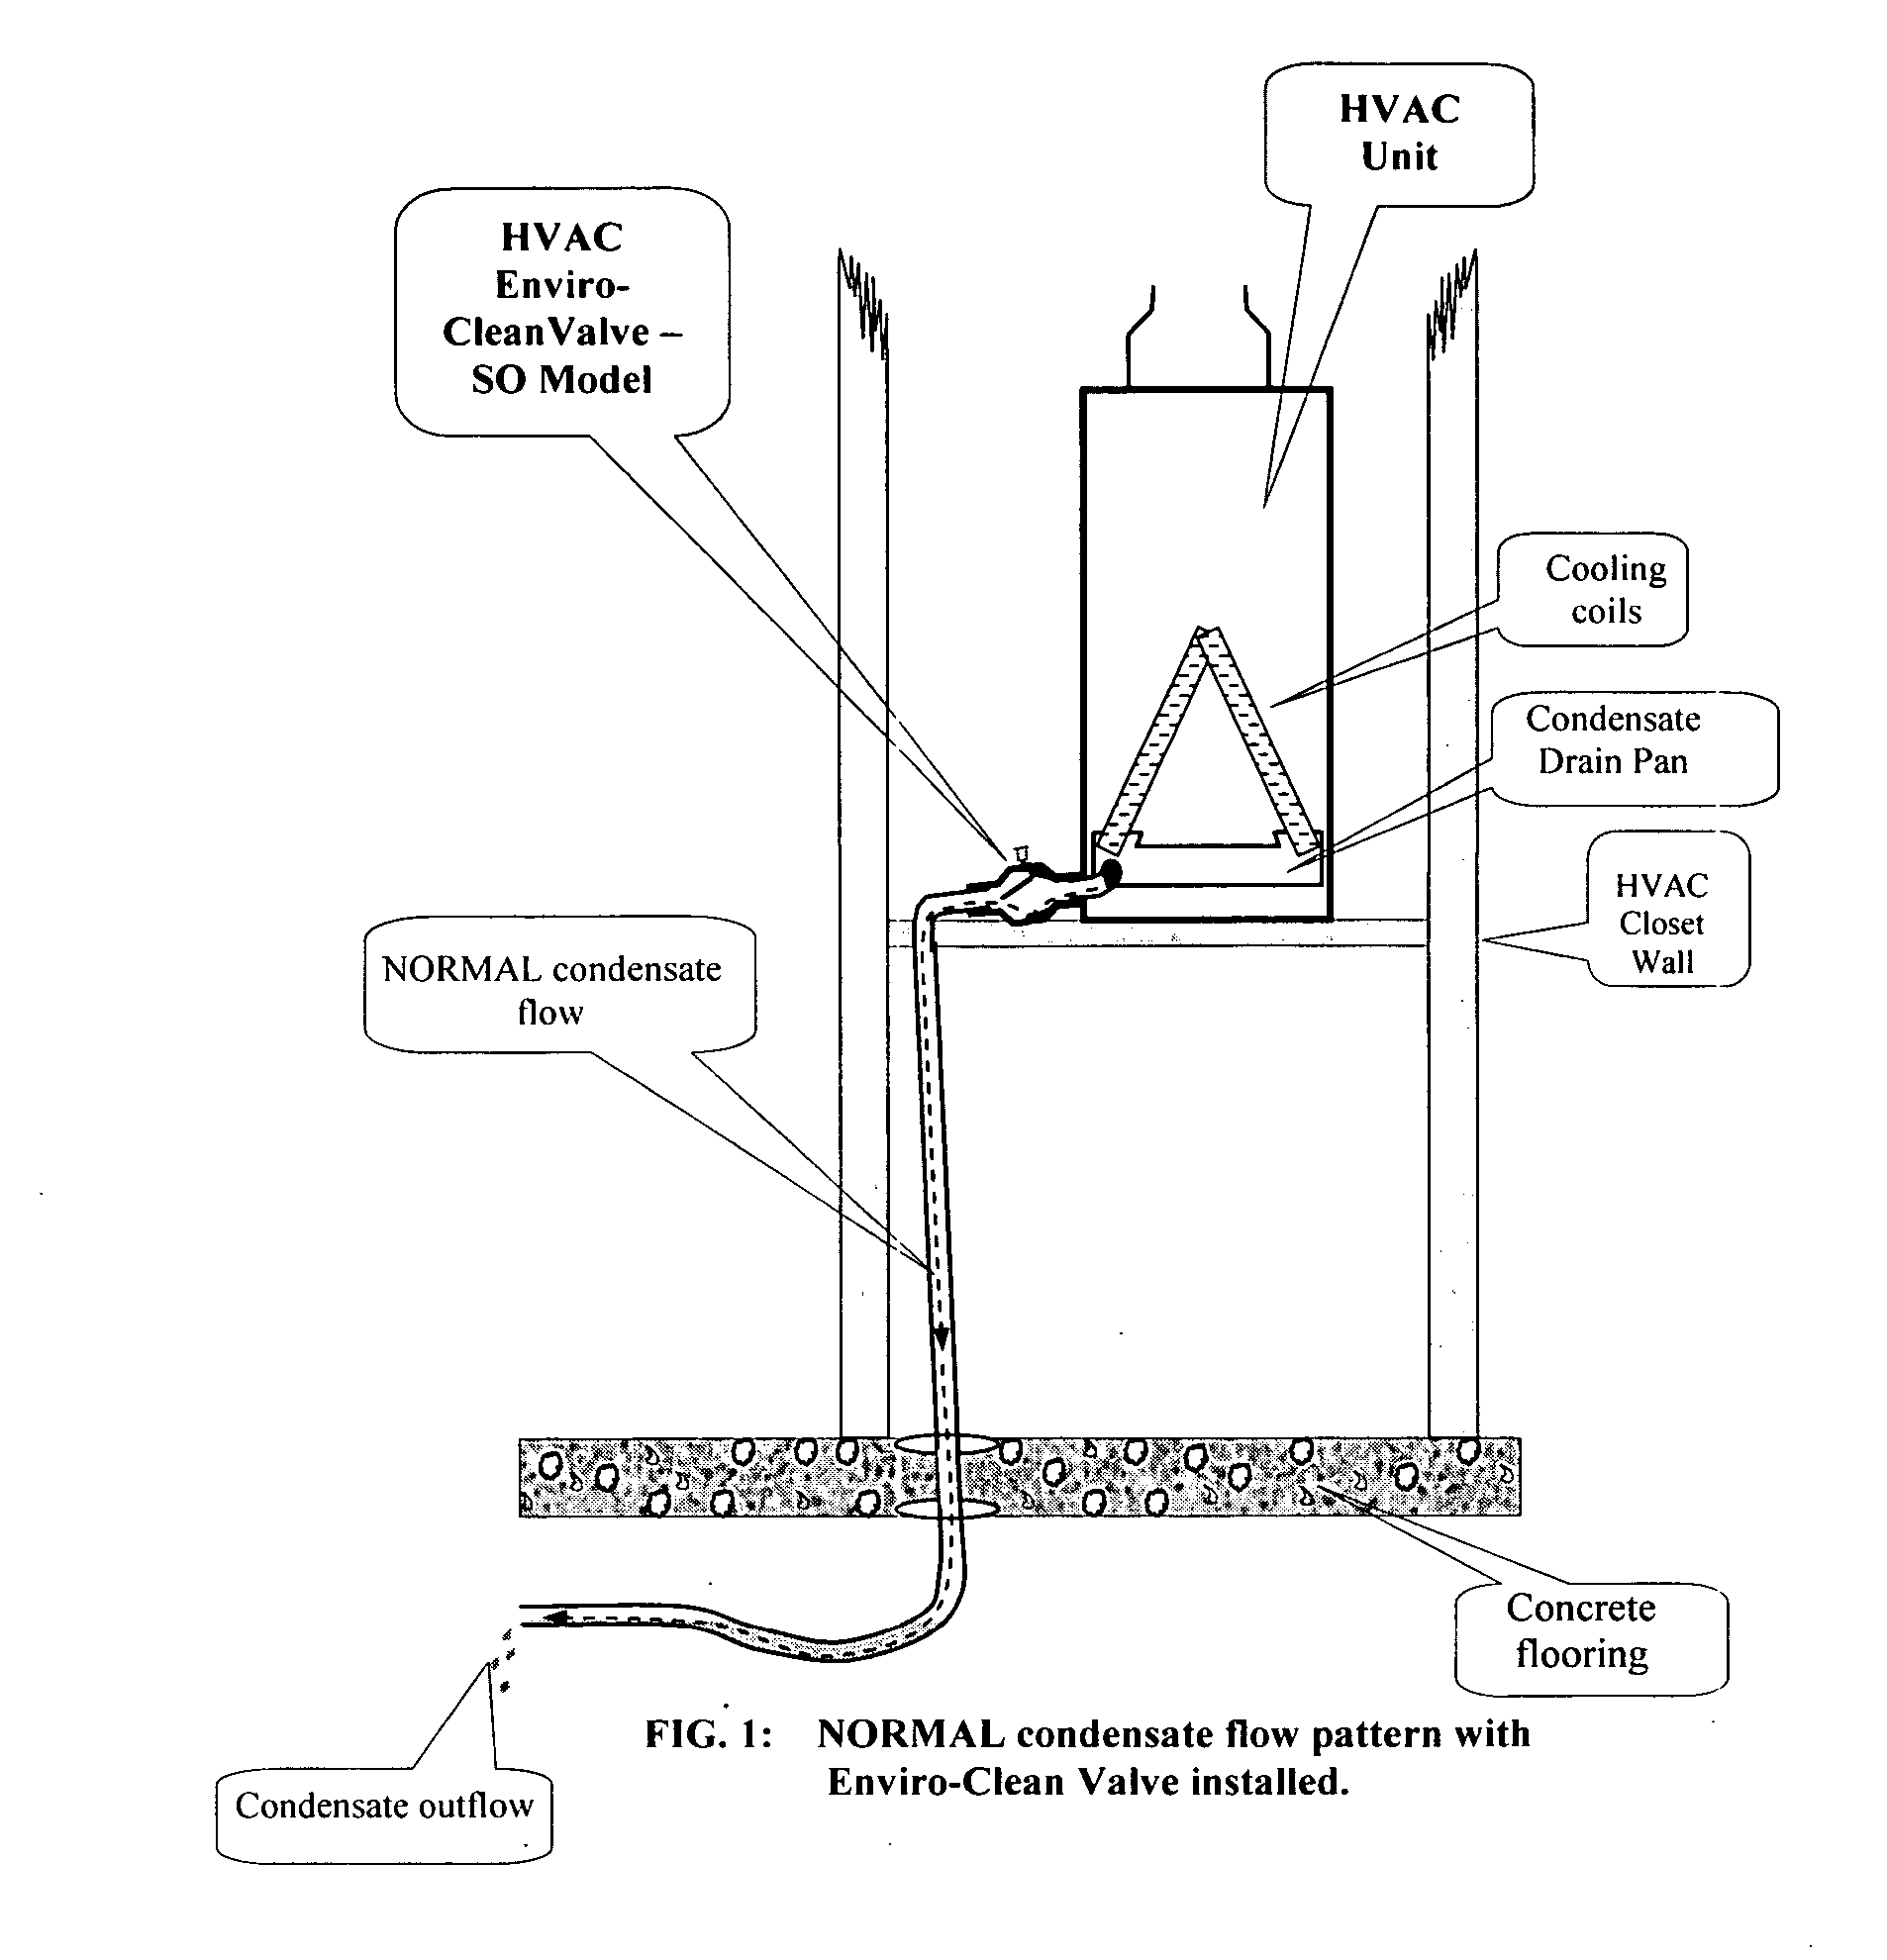 HVAC enviro-clean valve - SO model